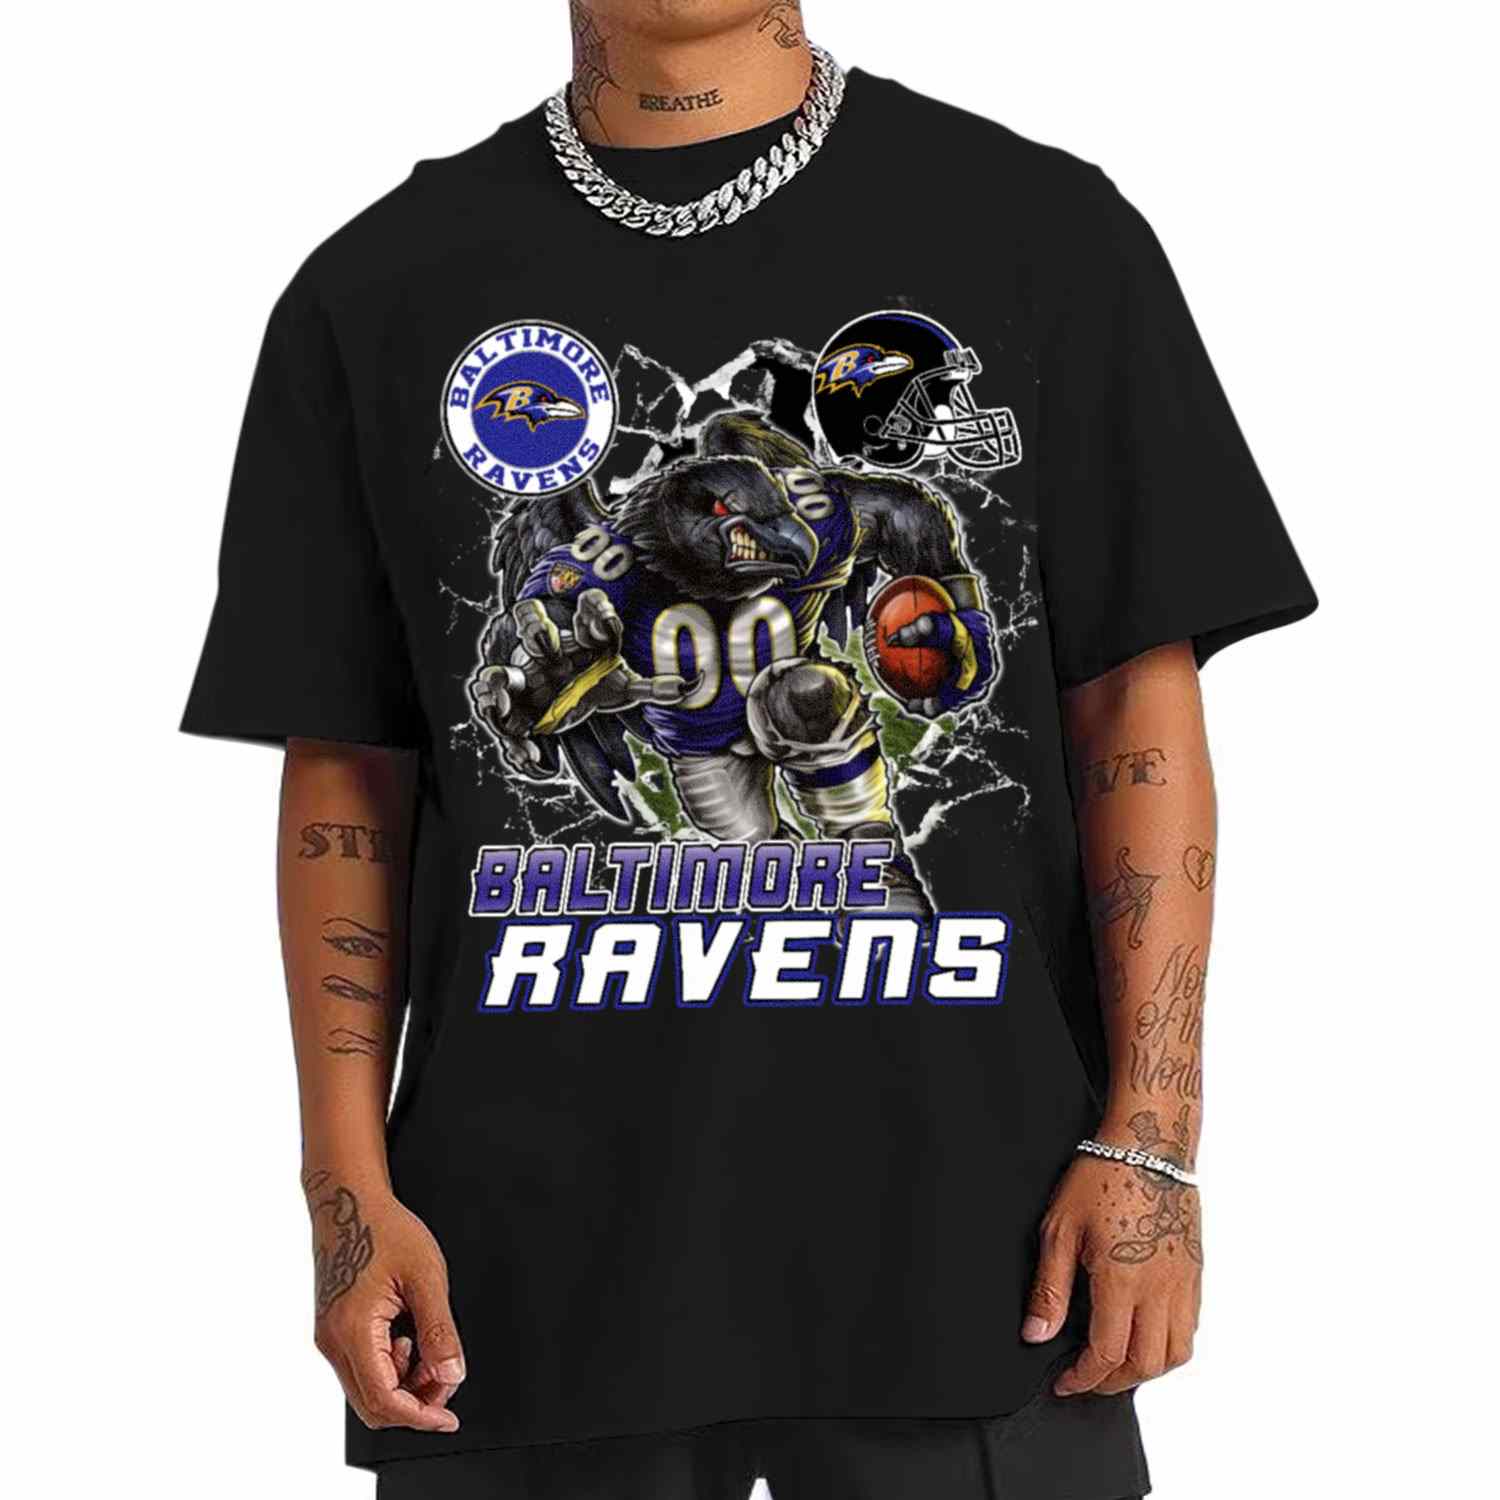 Mascot Breaking Through Wall Baltimore Ravens T-Shirt